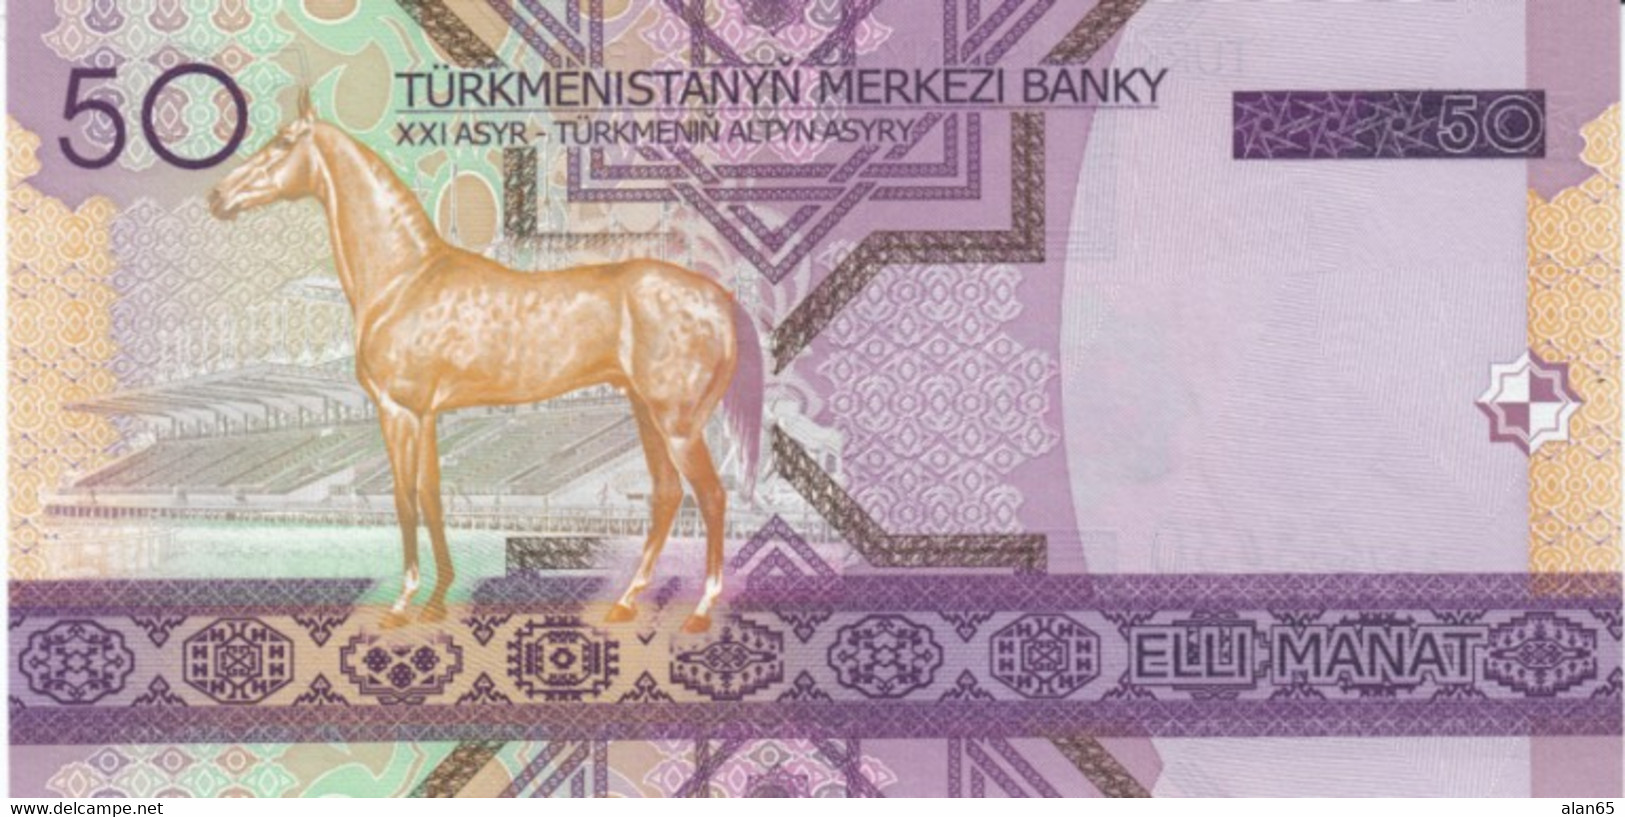 Turkmenistan #17, 50 Manat, UNC 2005 Banknote Currency - Turkmenistan